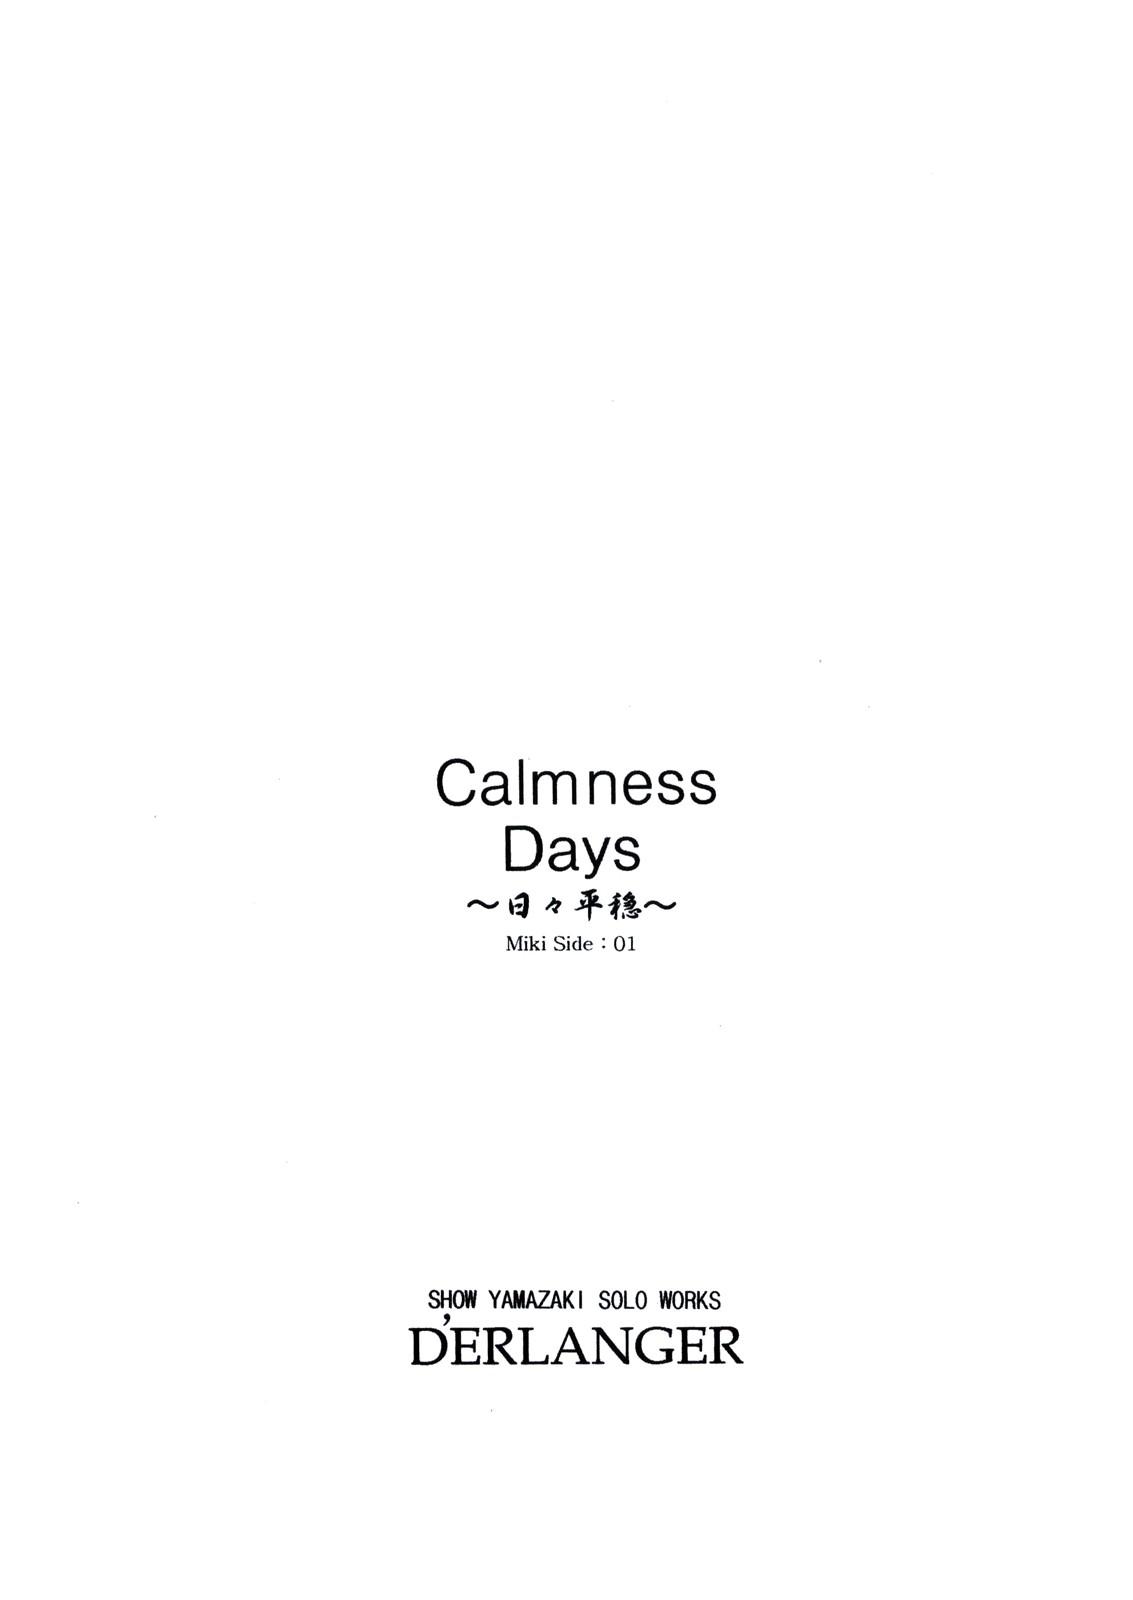 Calmness Days Miki Side:01 2